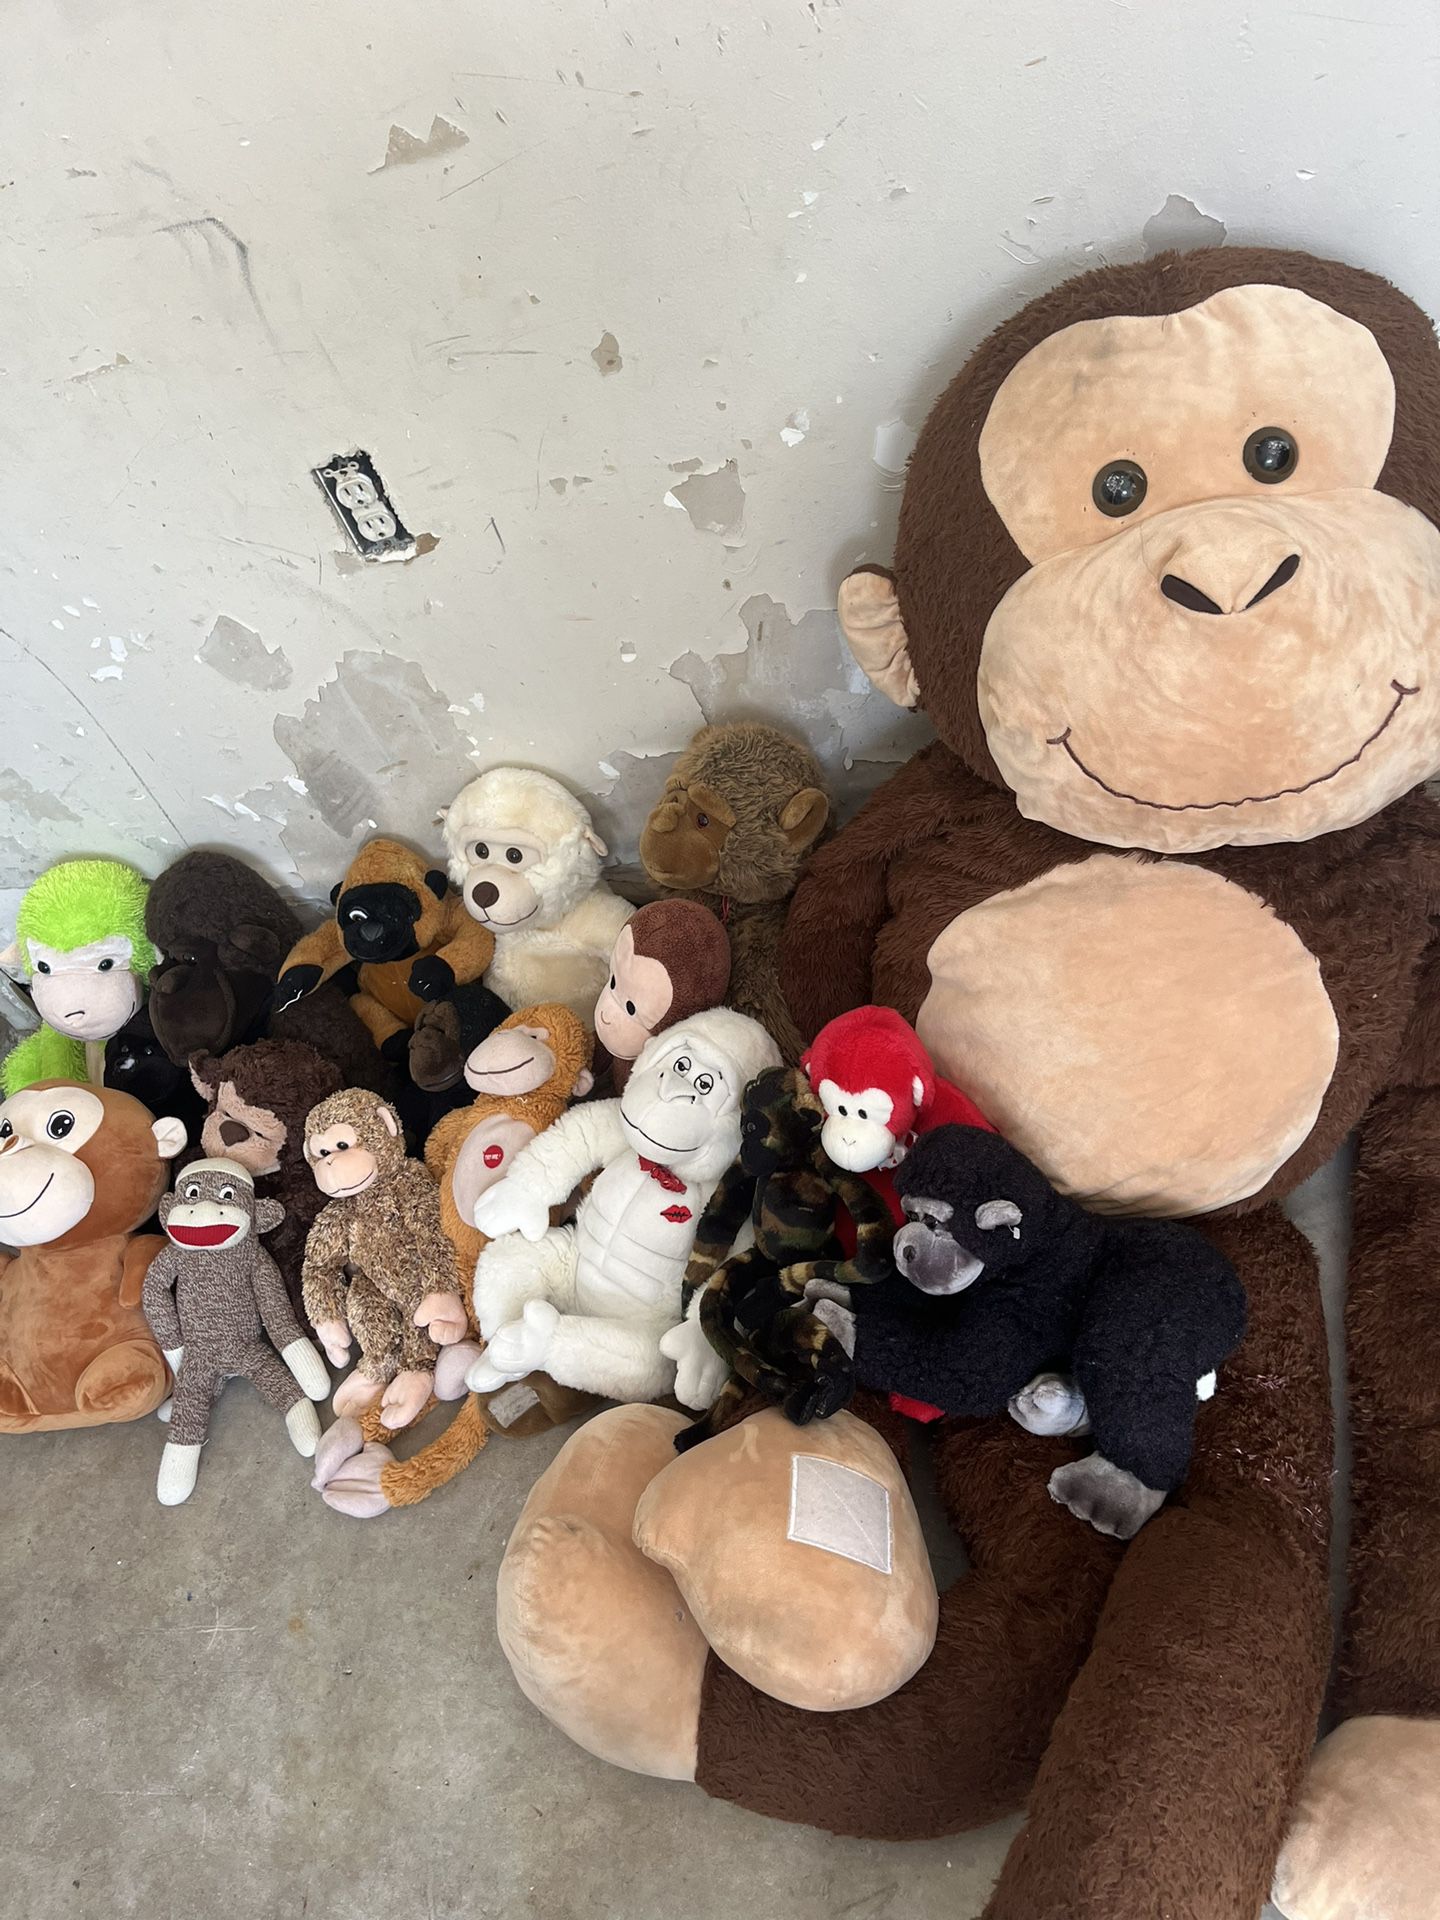 Monkeys stuffed animals